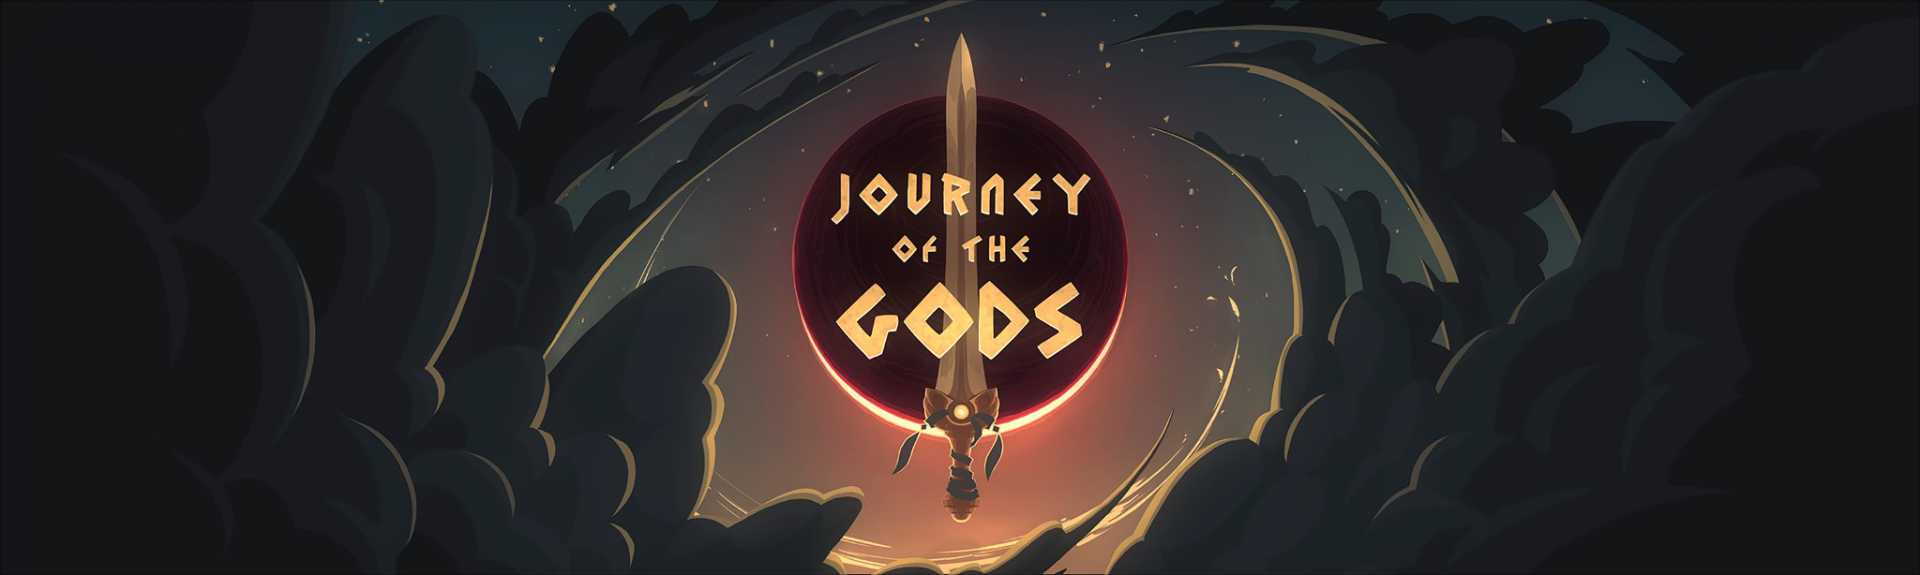 Journey of the Gods: ANÁLISIS